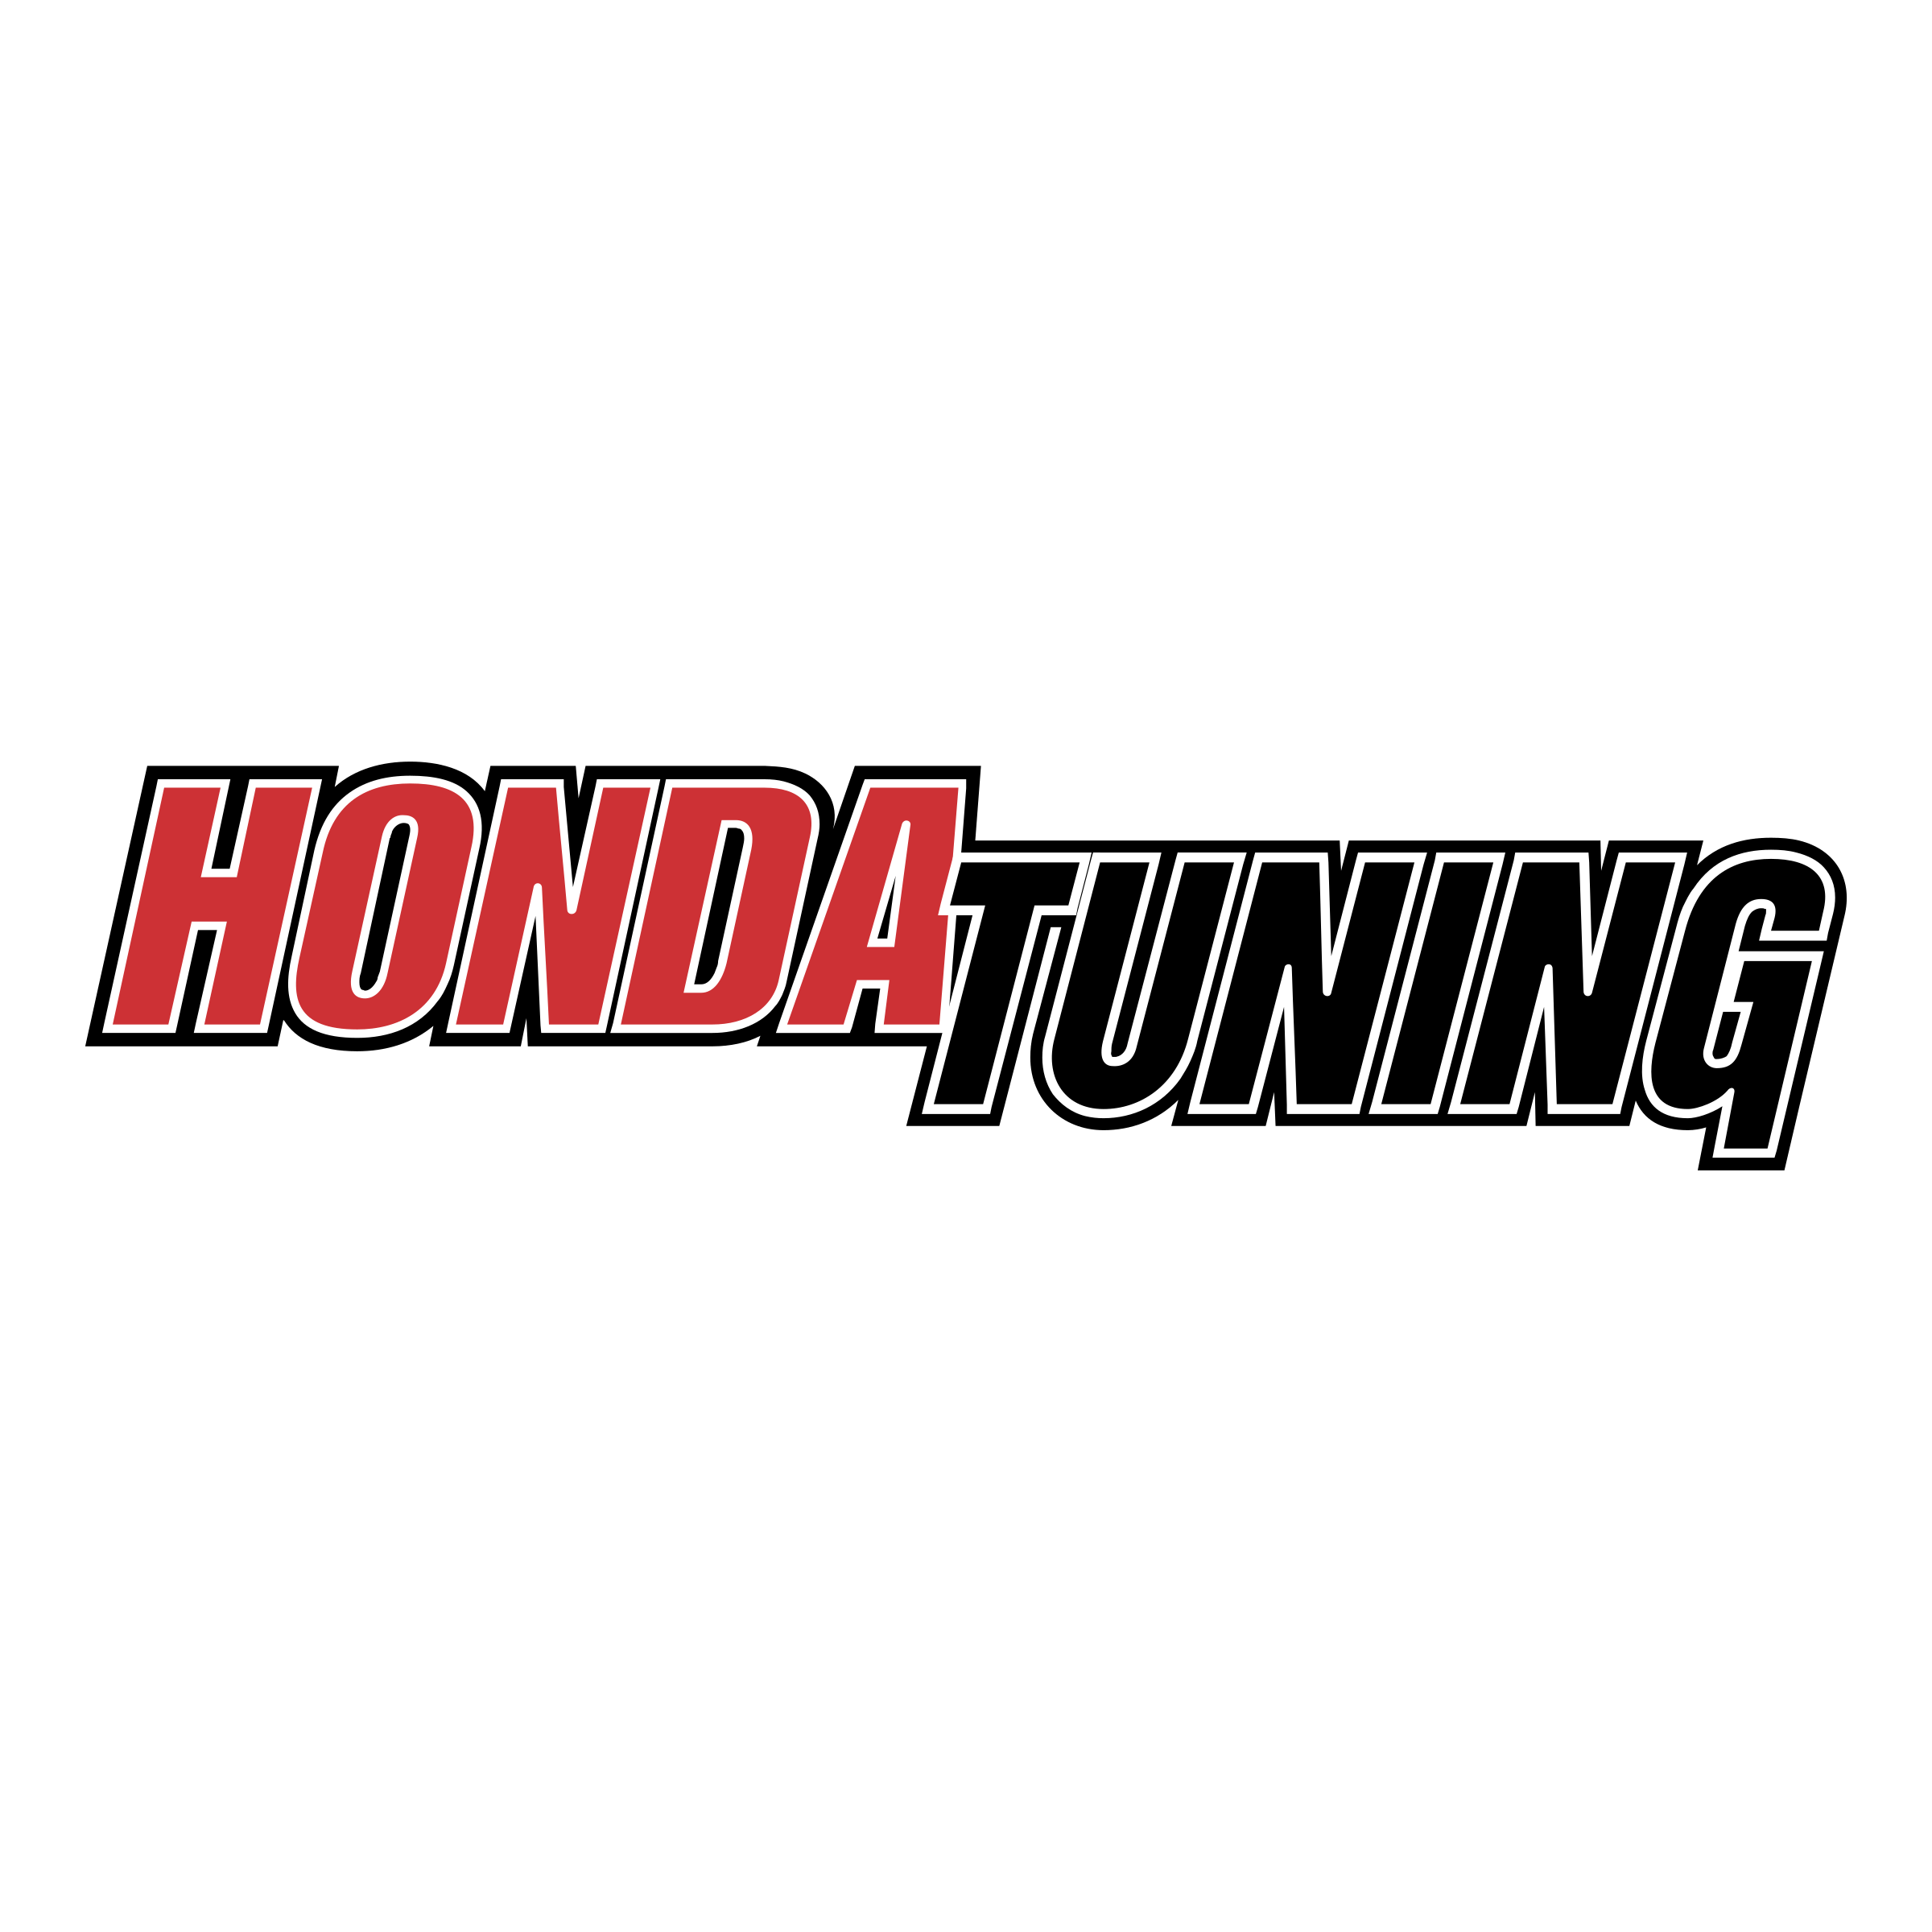 Tuning Logo - Honda Tuning Logo PNG Transparent & SVG Vector - Freebie Supply